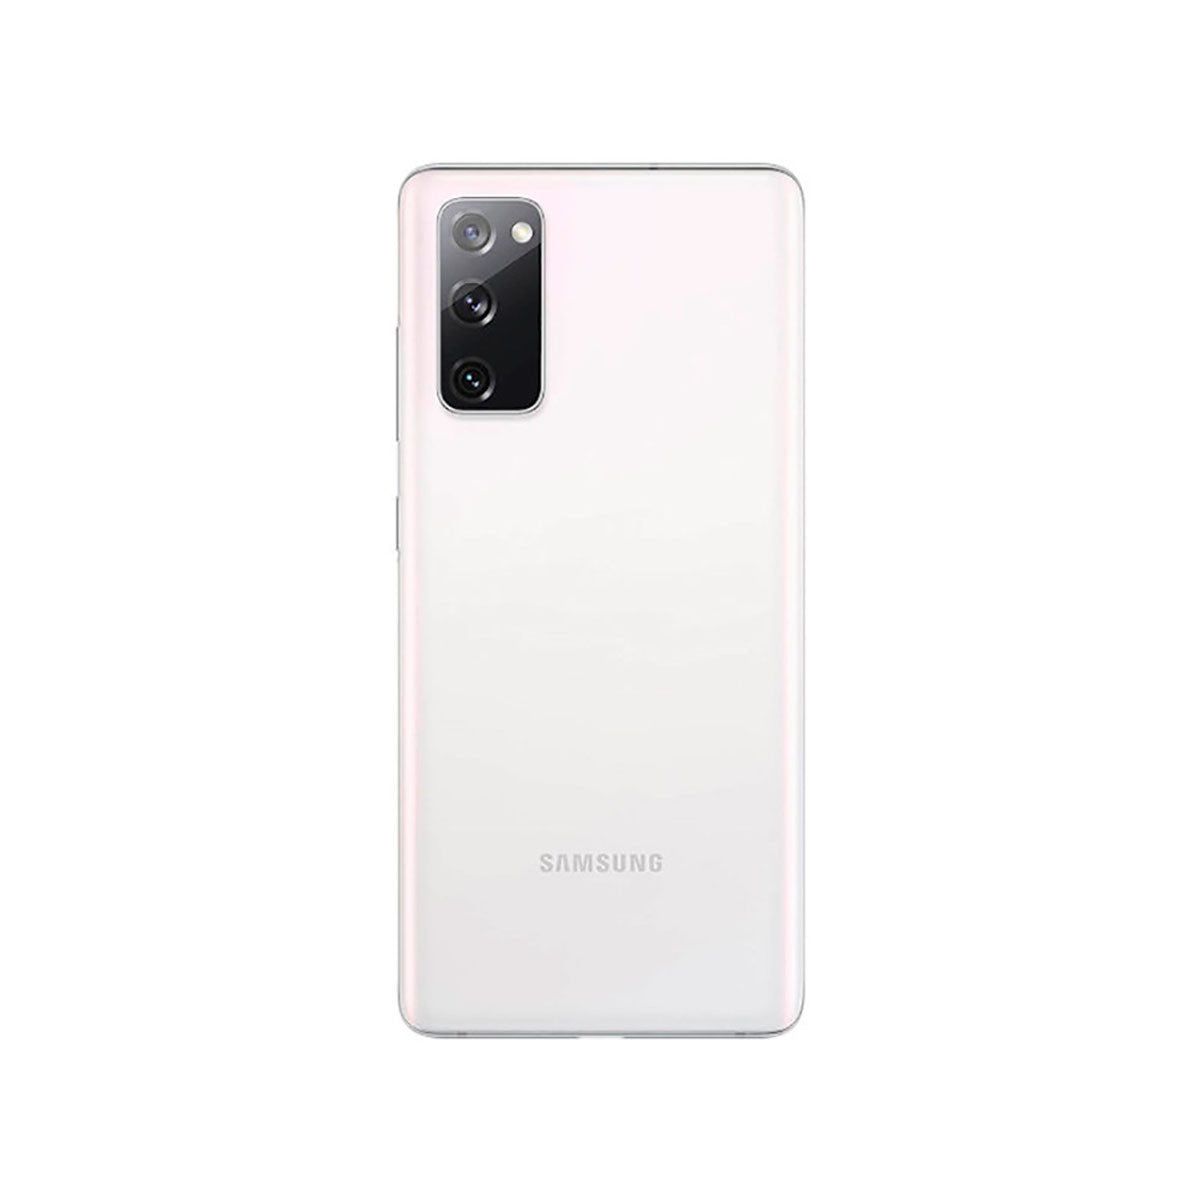 Samsung Galaxy S20 FE 5G 6GB/128GB Blanco (Cloud White) Dual SIM G781 Smartphone | Samsung